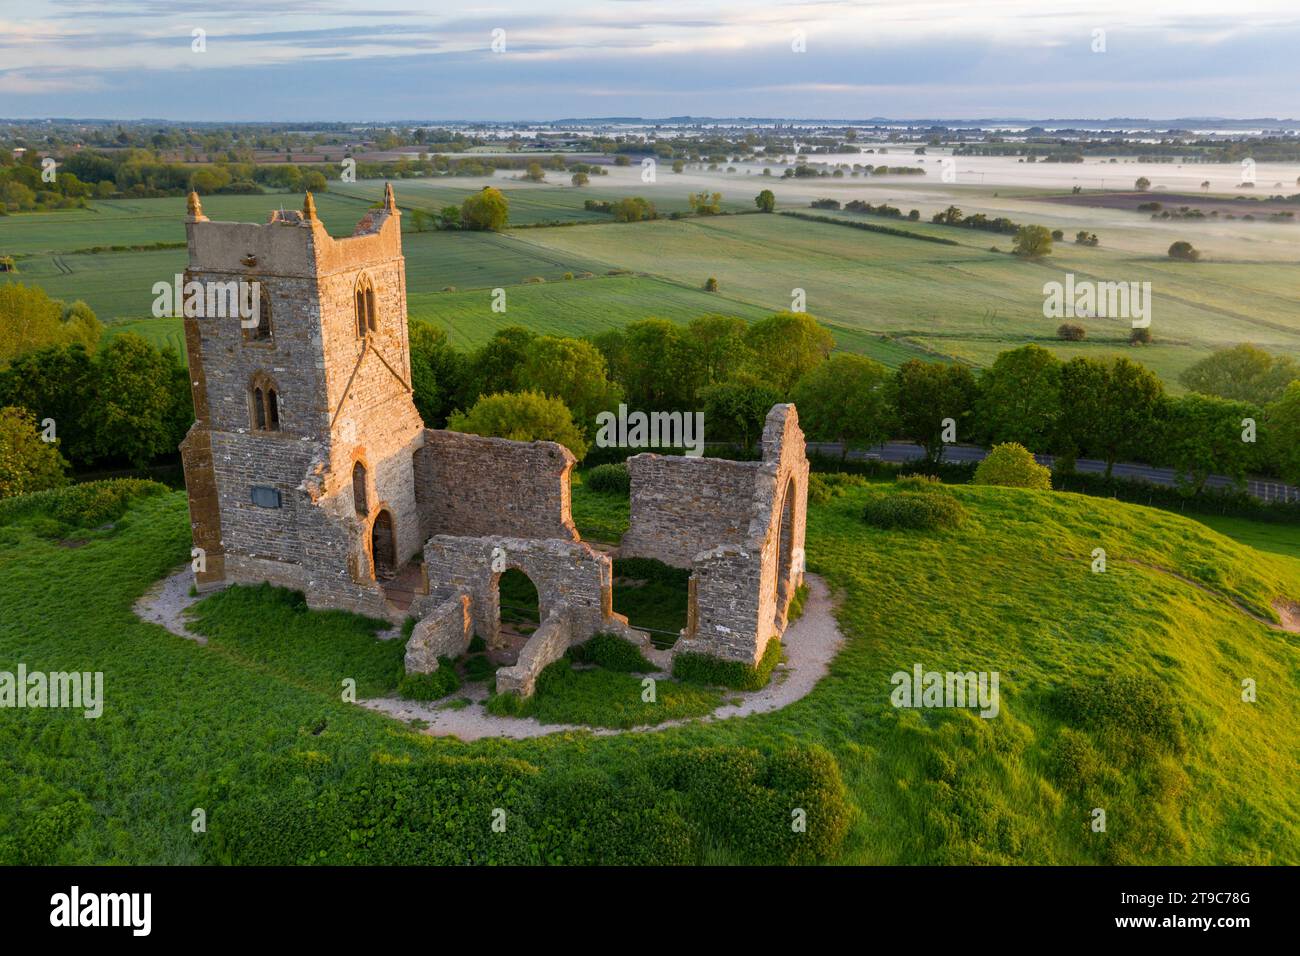 Die Ruinen der St. Michael’s Church in Burrow Mump, Somerset, England. Frühjahr (Mai) 2019. Stockfoto